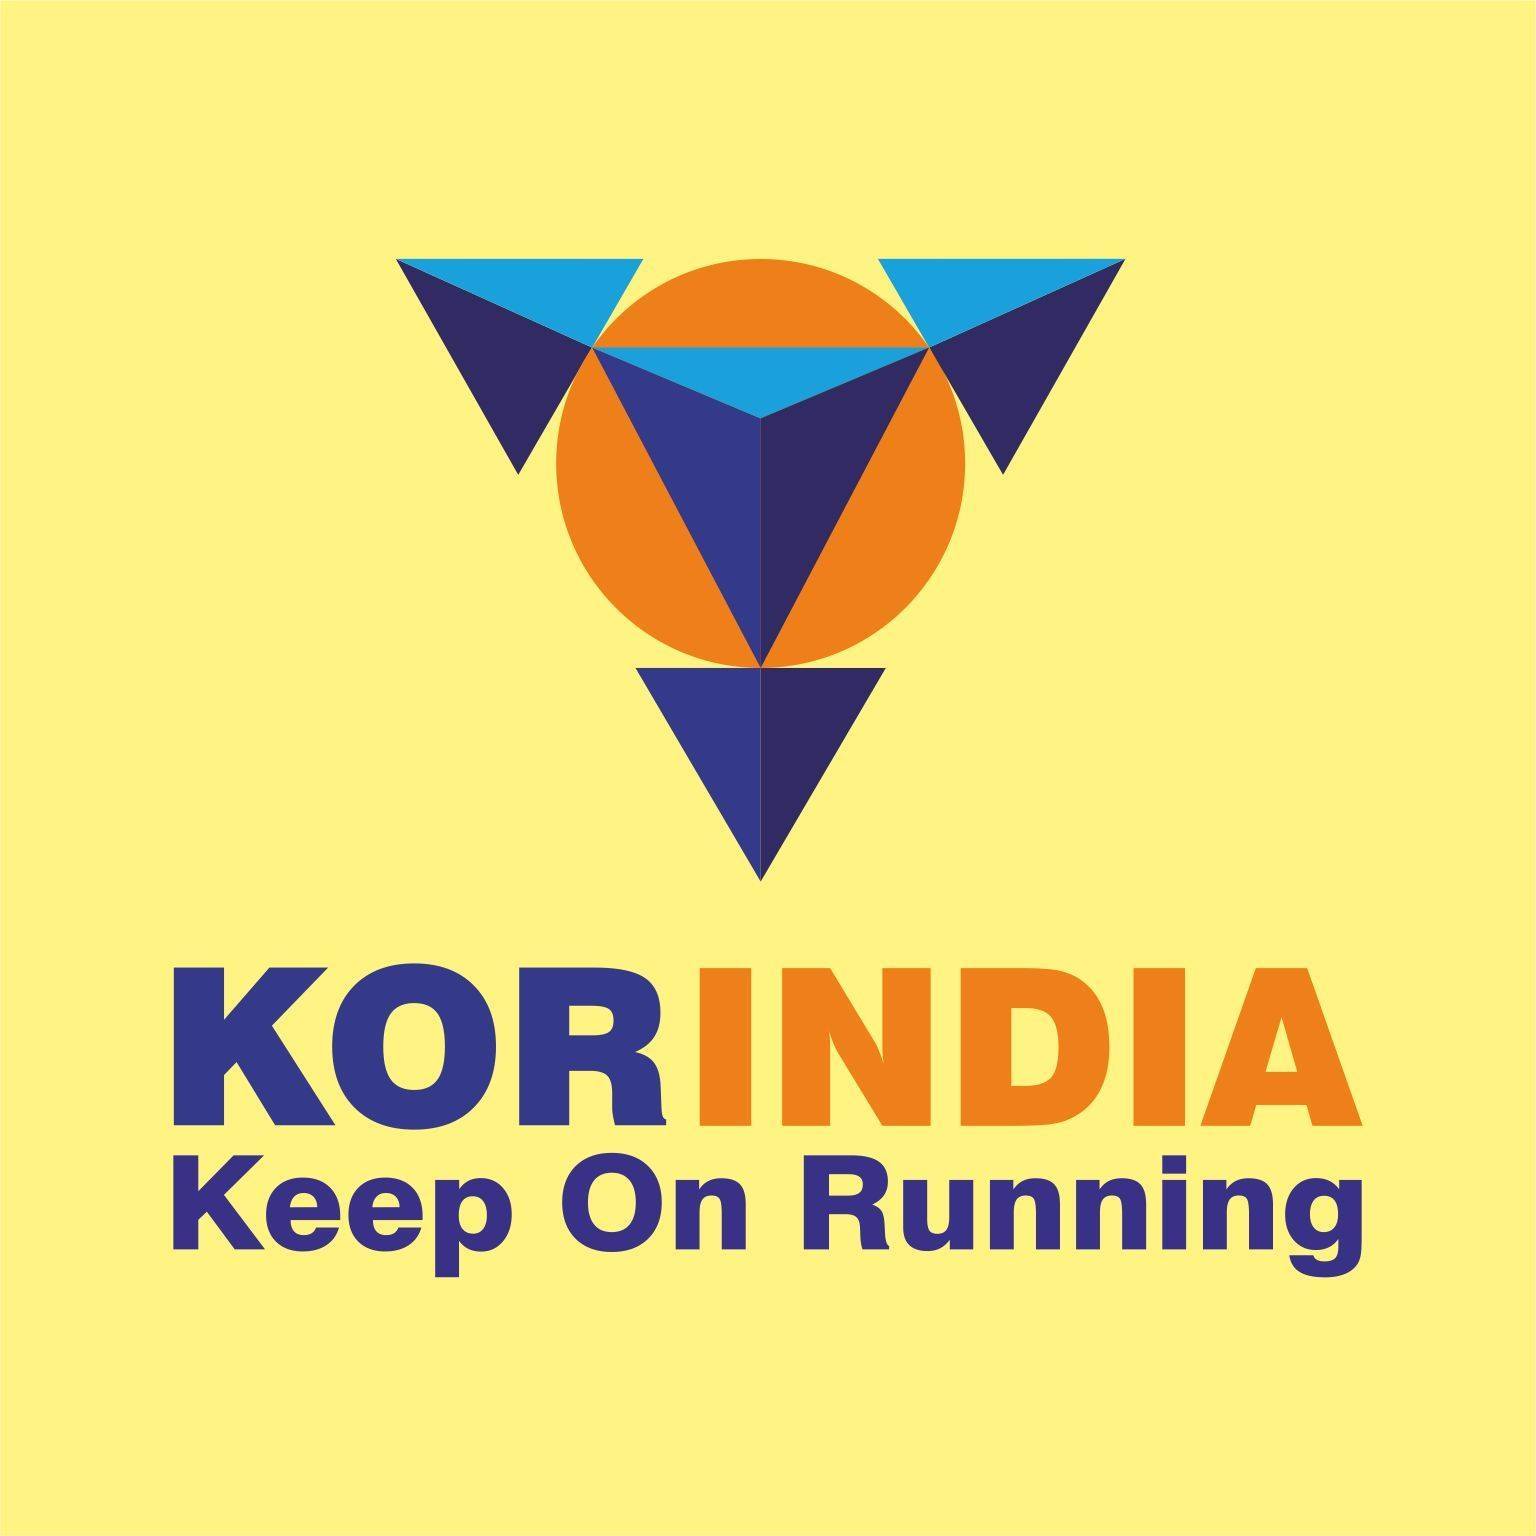 Keep On Running India